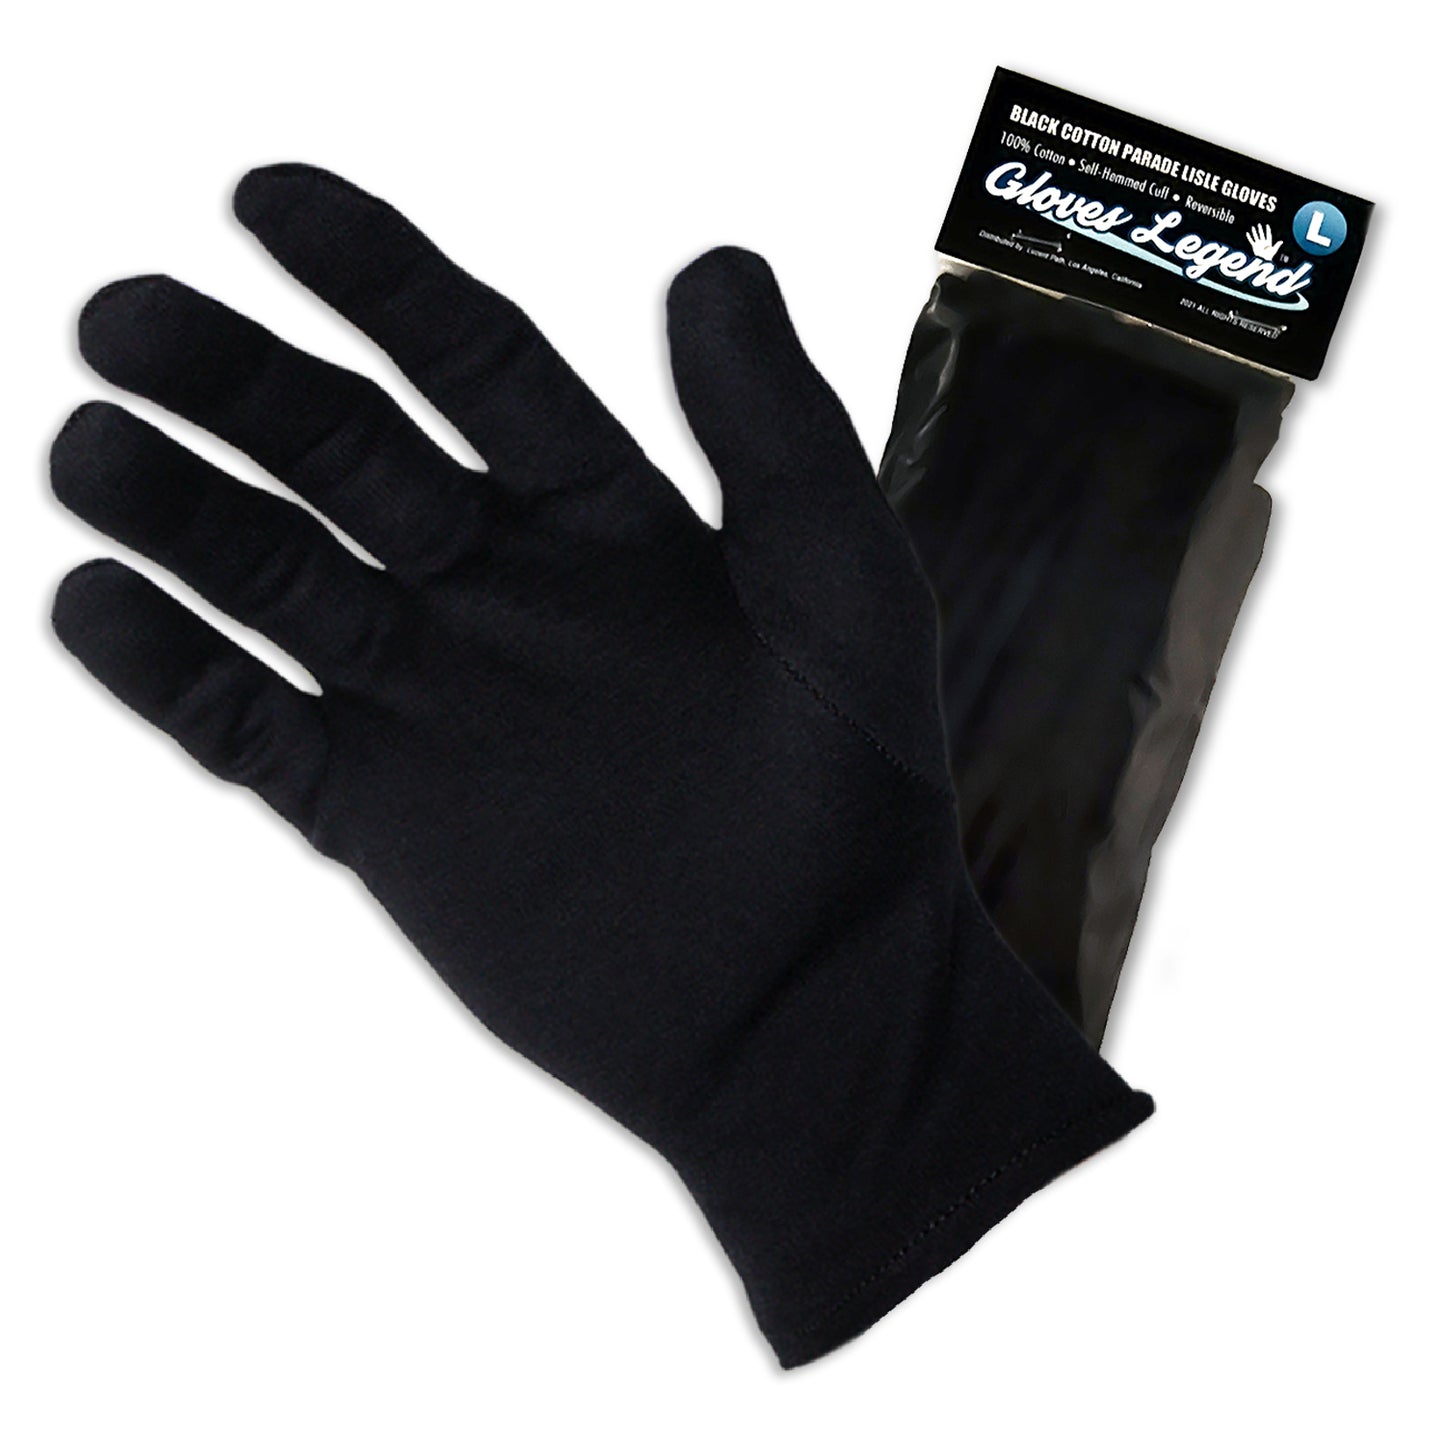 100% Cotton Black Parade Fashion Inspection Lisle Gloves - Size Large - 6 Pairs